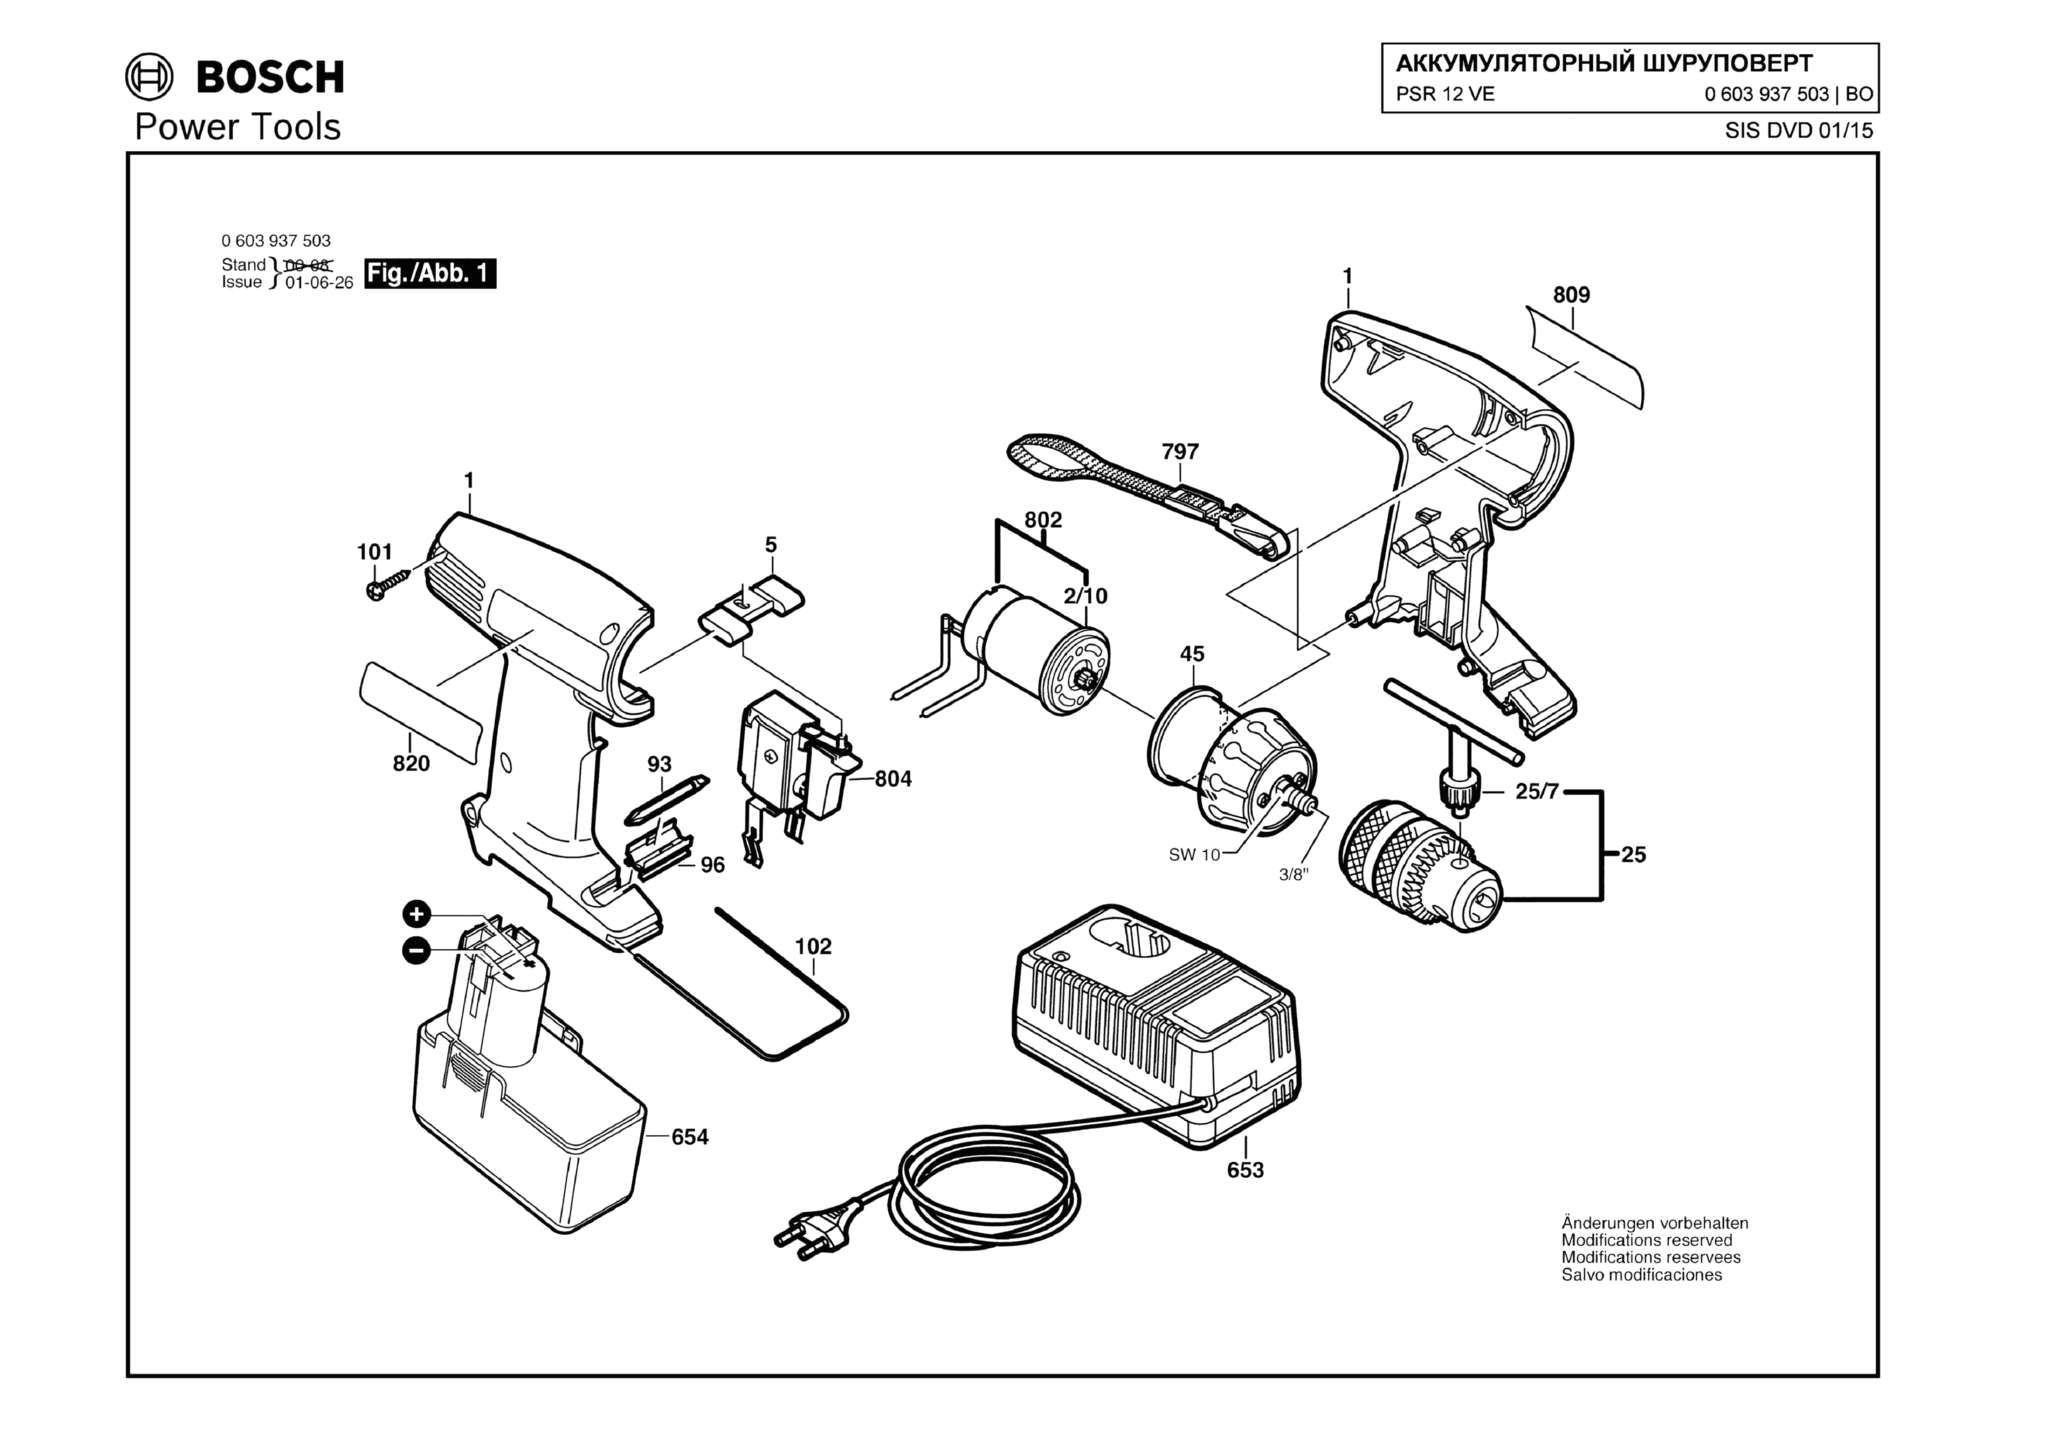 Запчасти, схема и деталировка Bosch PSR 12 VE (ТИП 0603937503)